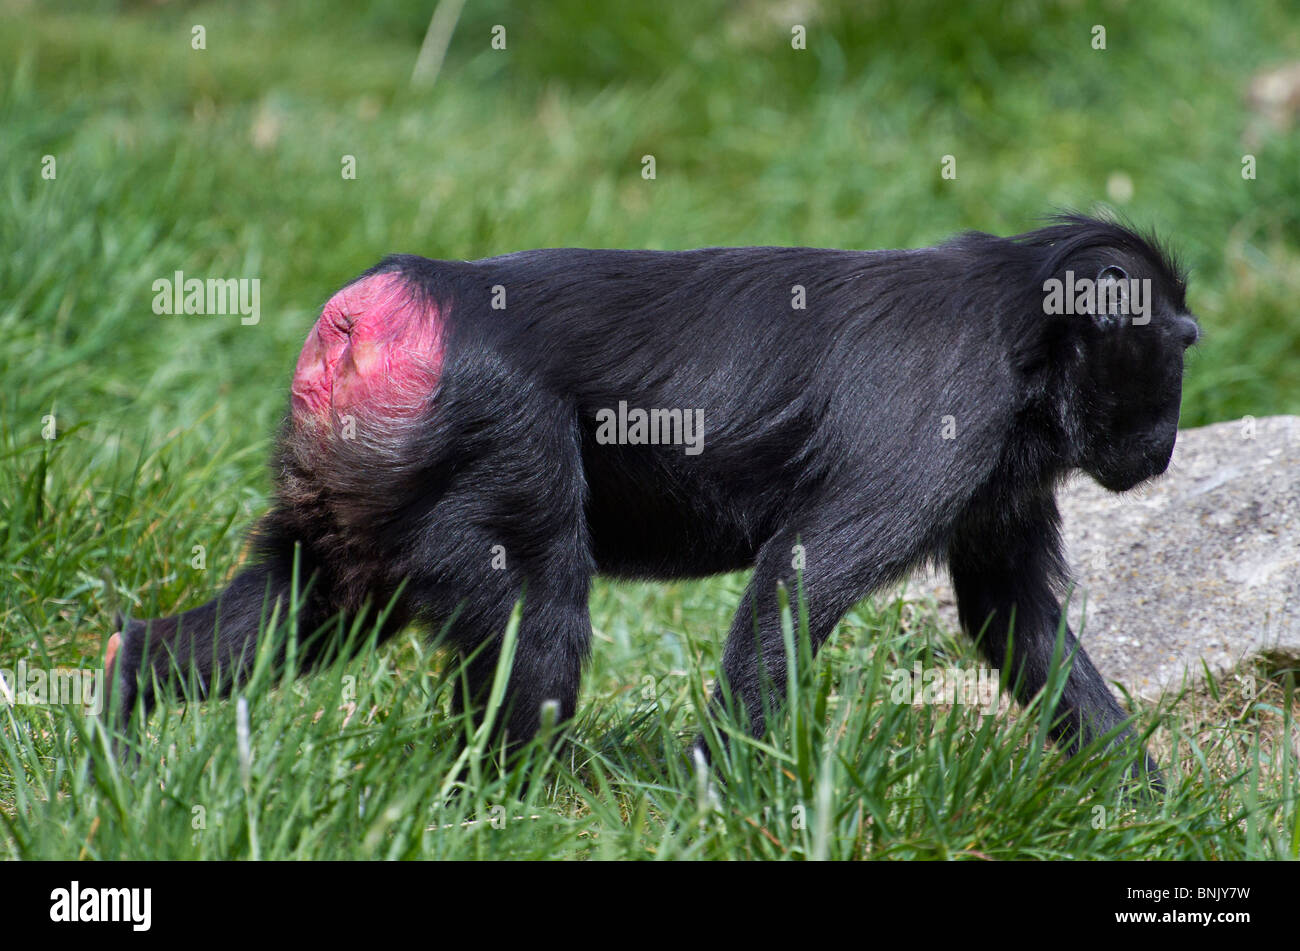 Sulawesi Crested schwarzen Makaken (Macaca nigra) Anzeige rosa unten Stockfoto